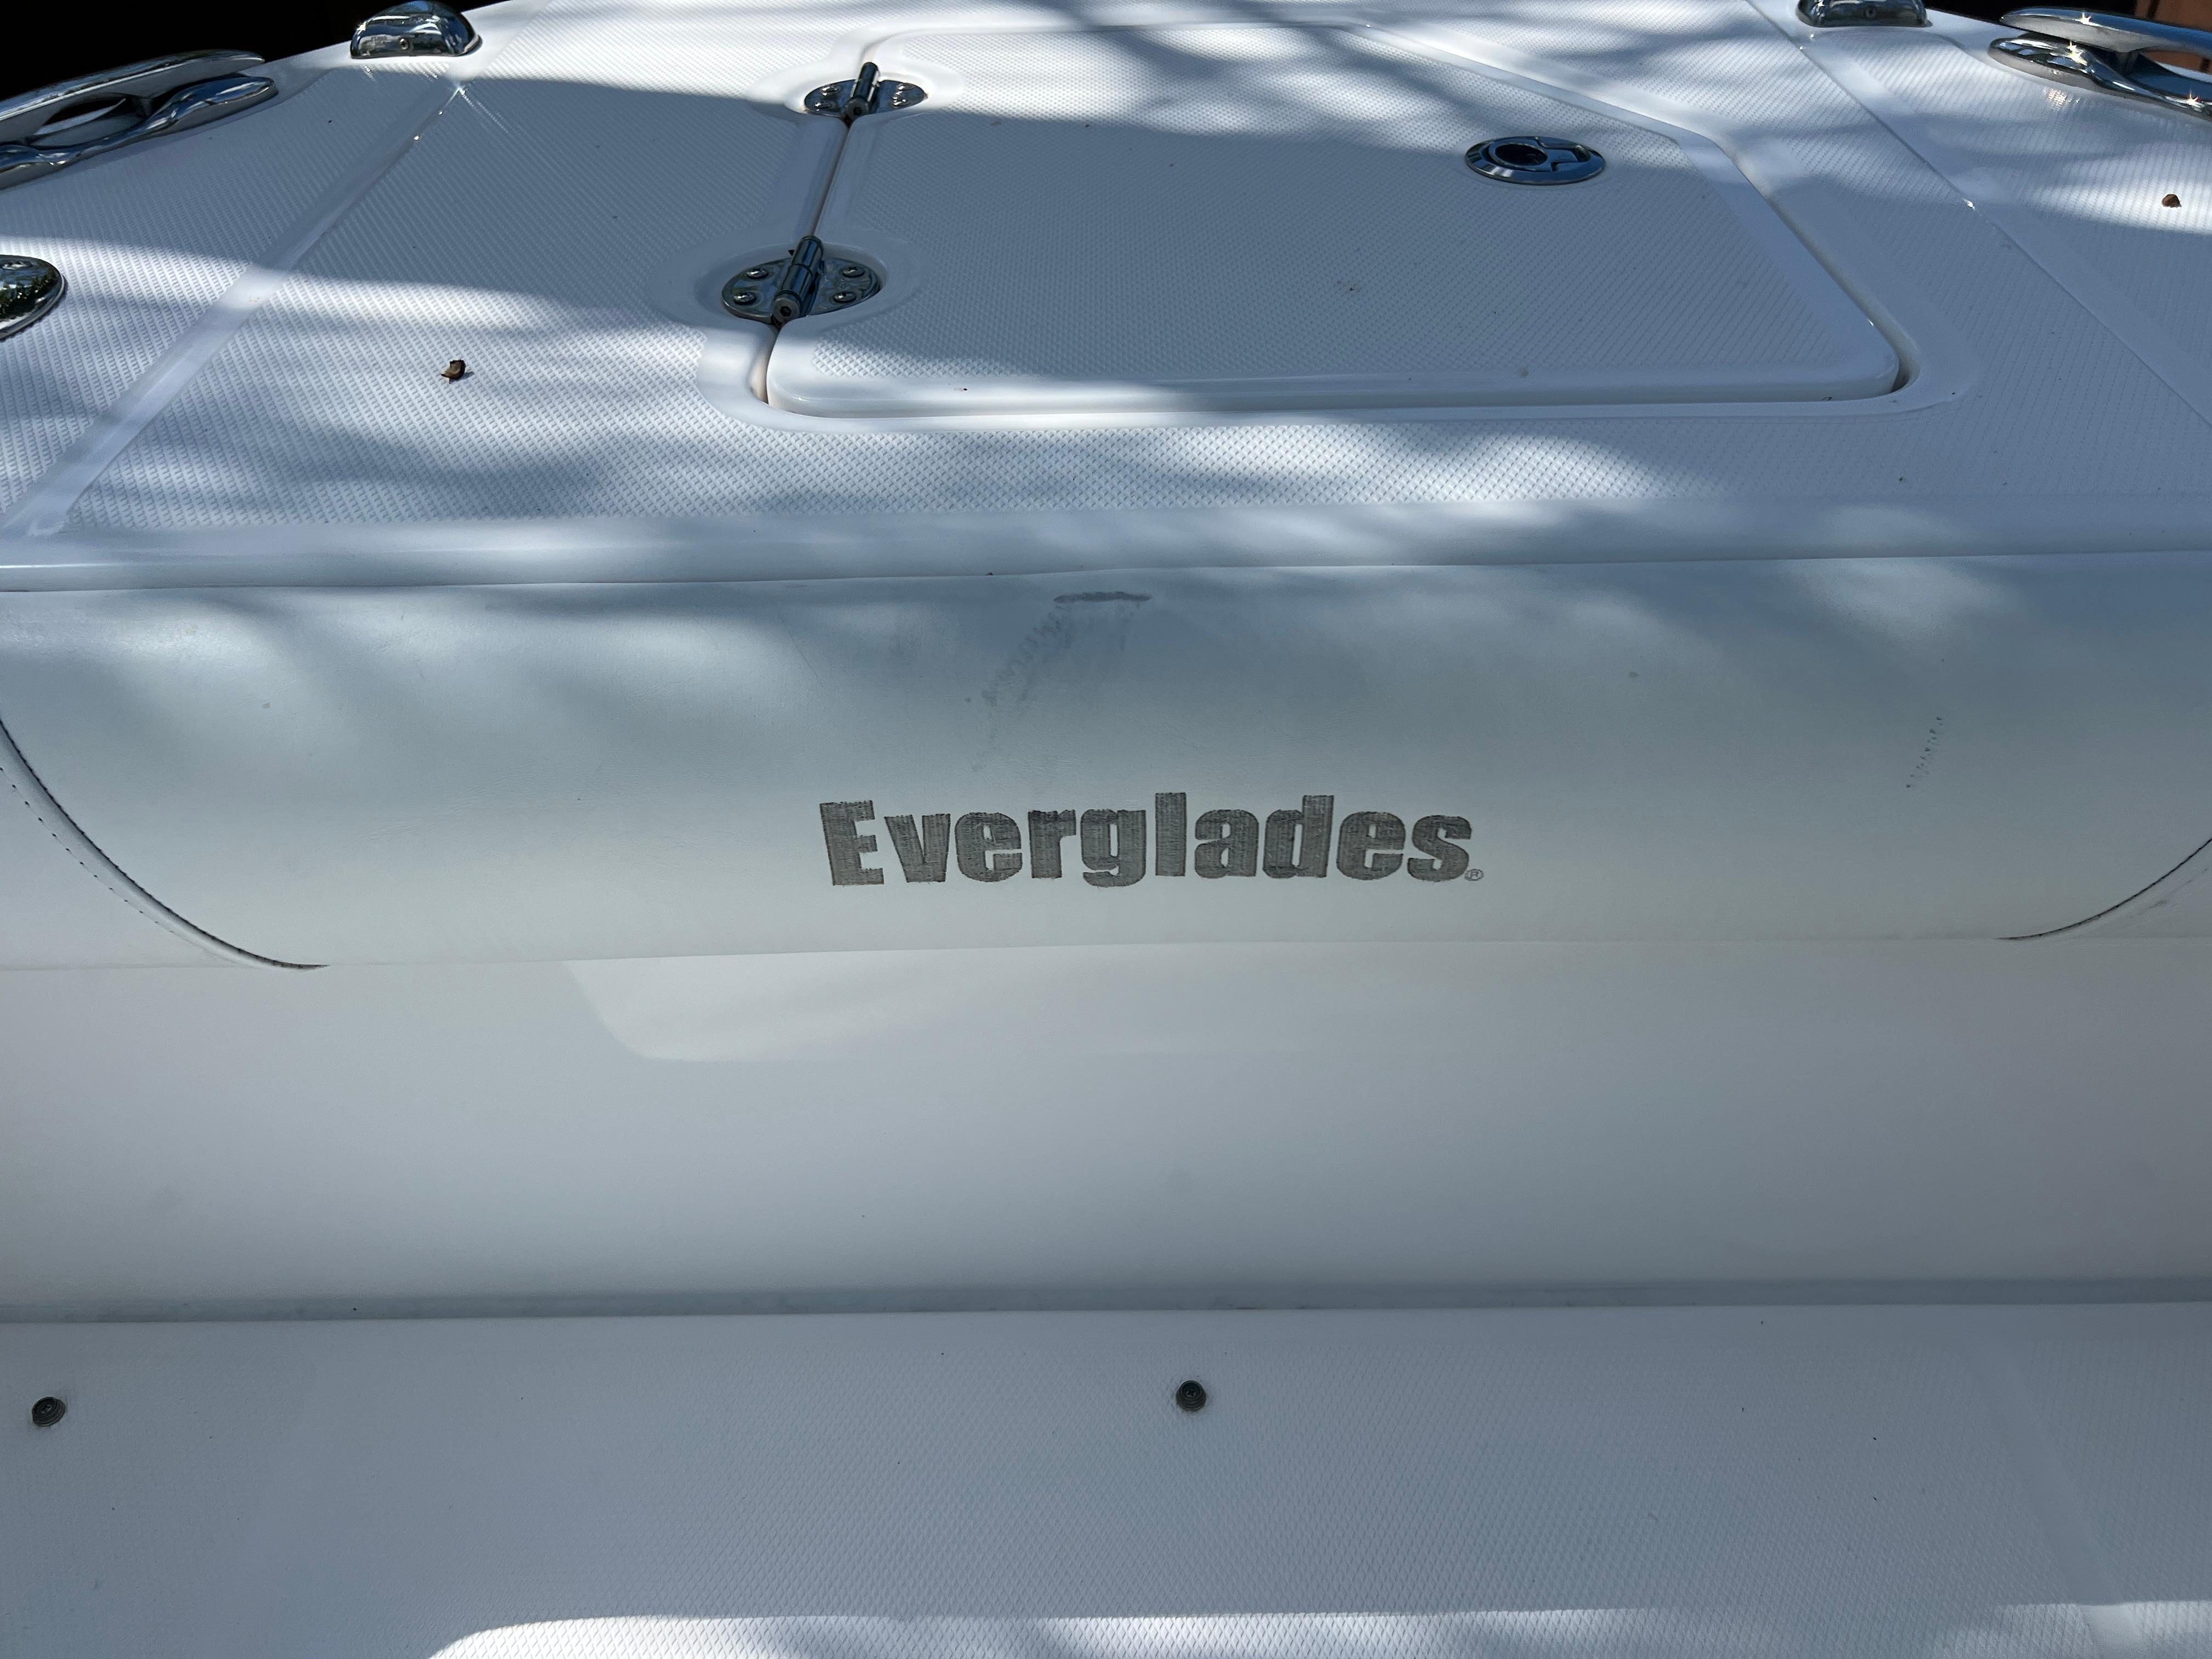 2019 Everglades 273 Center Console